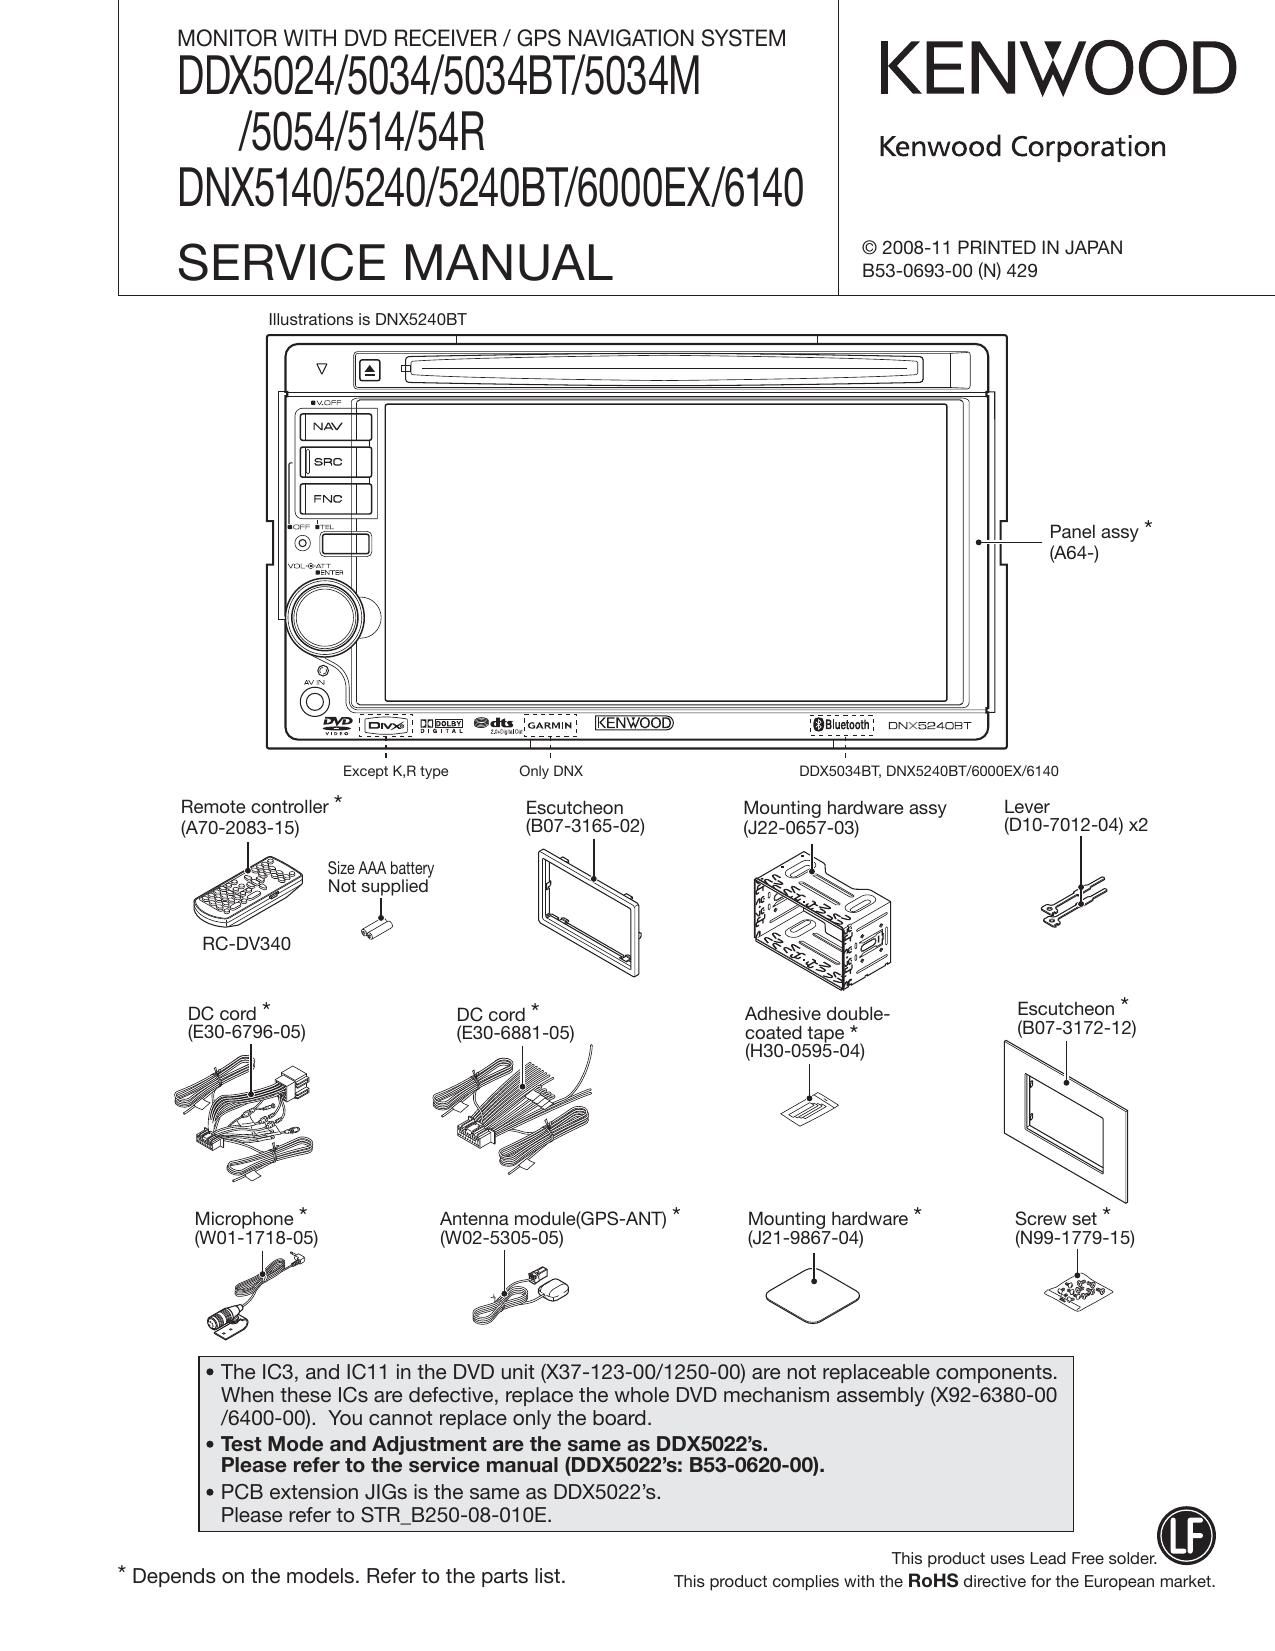 Kenwood DNX 5140 Service Manual